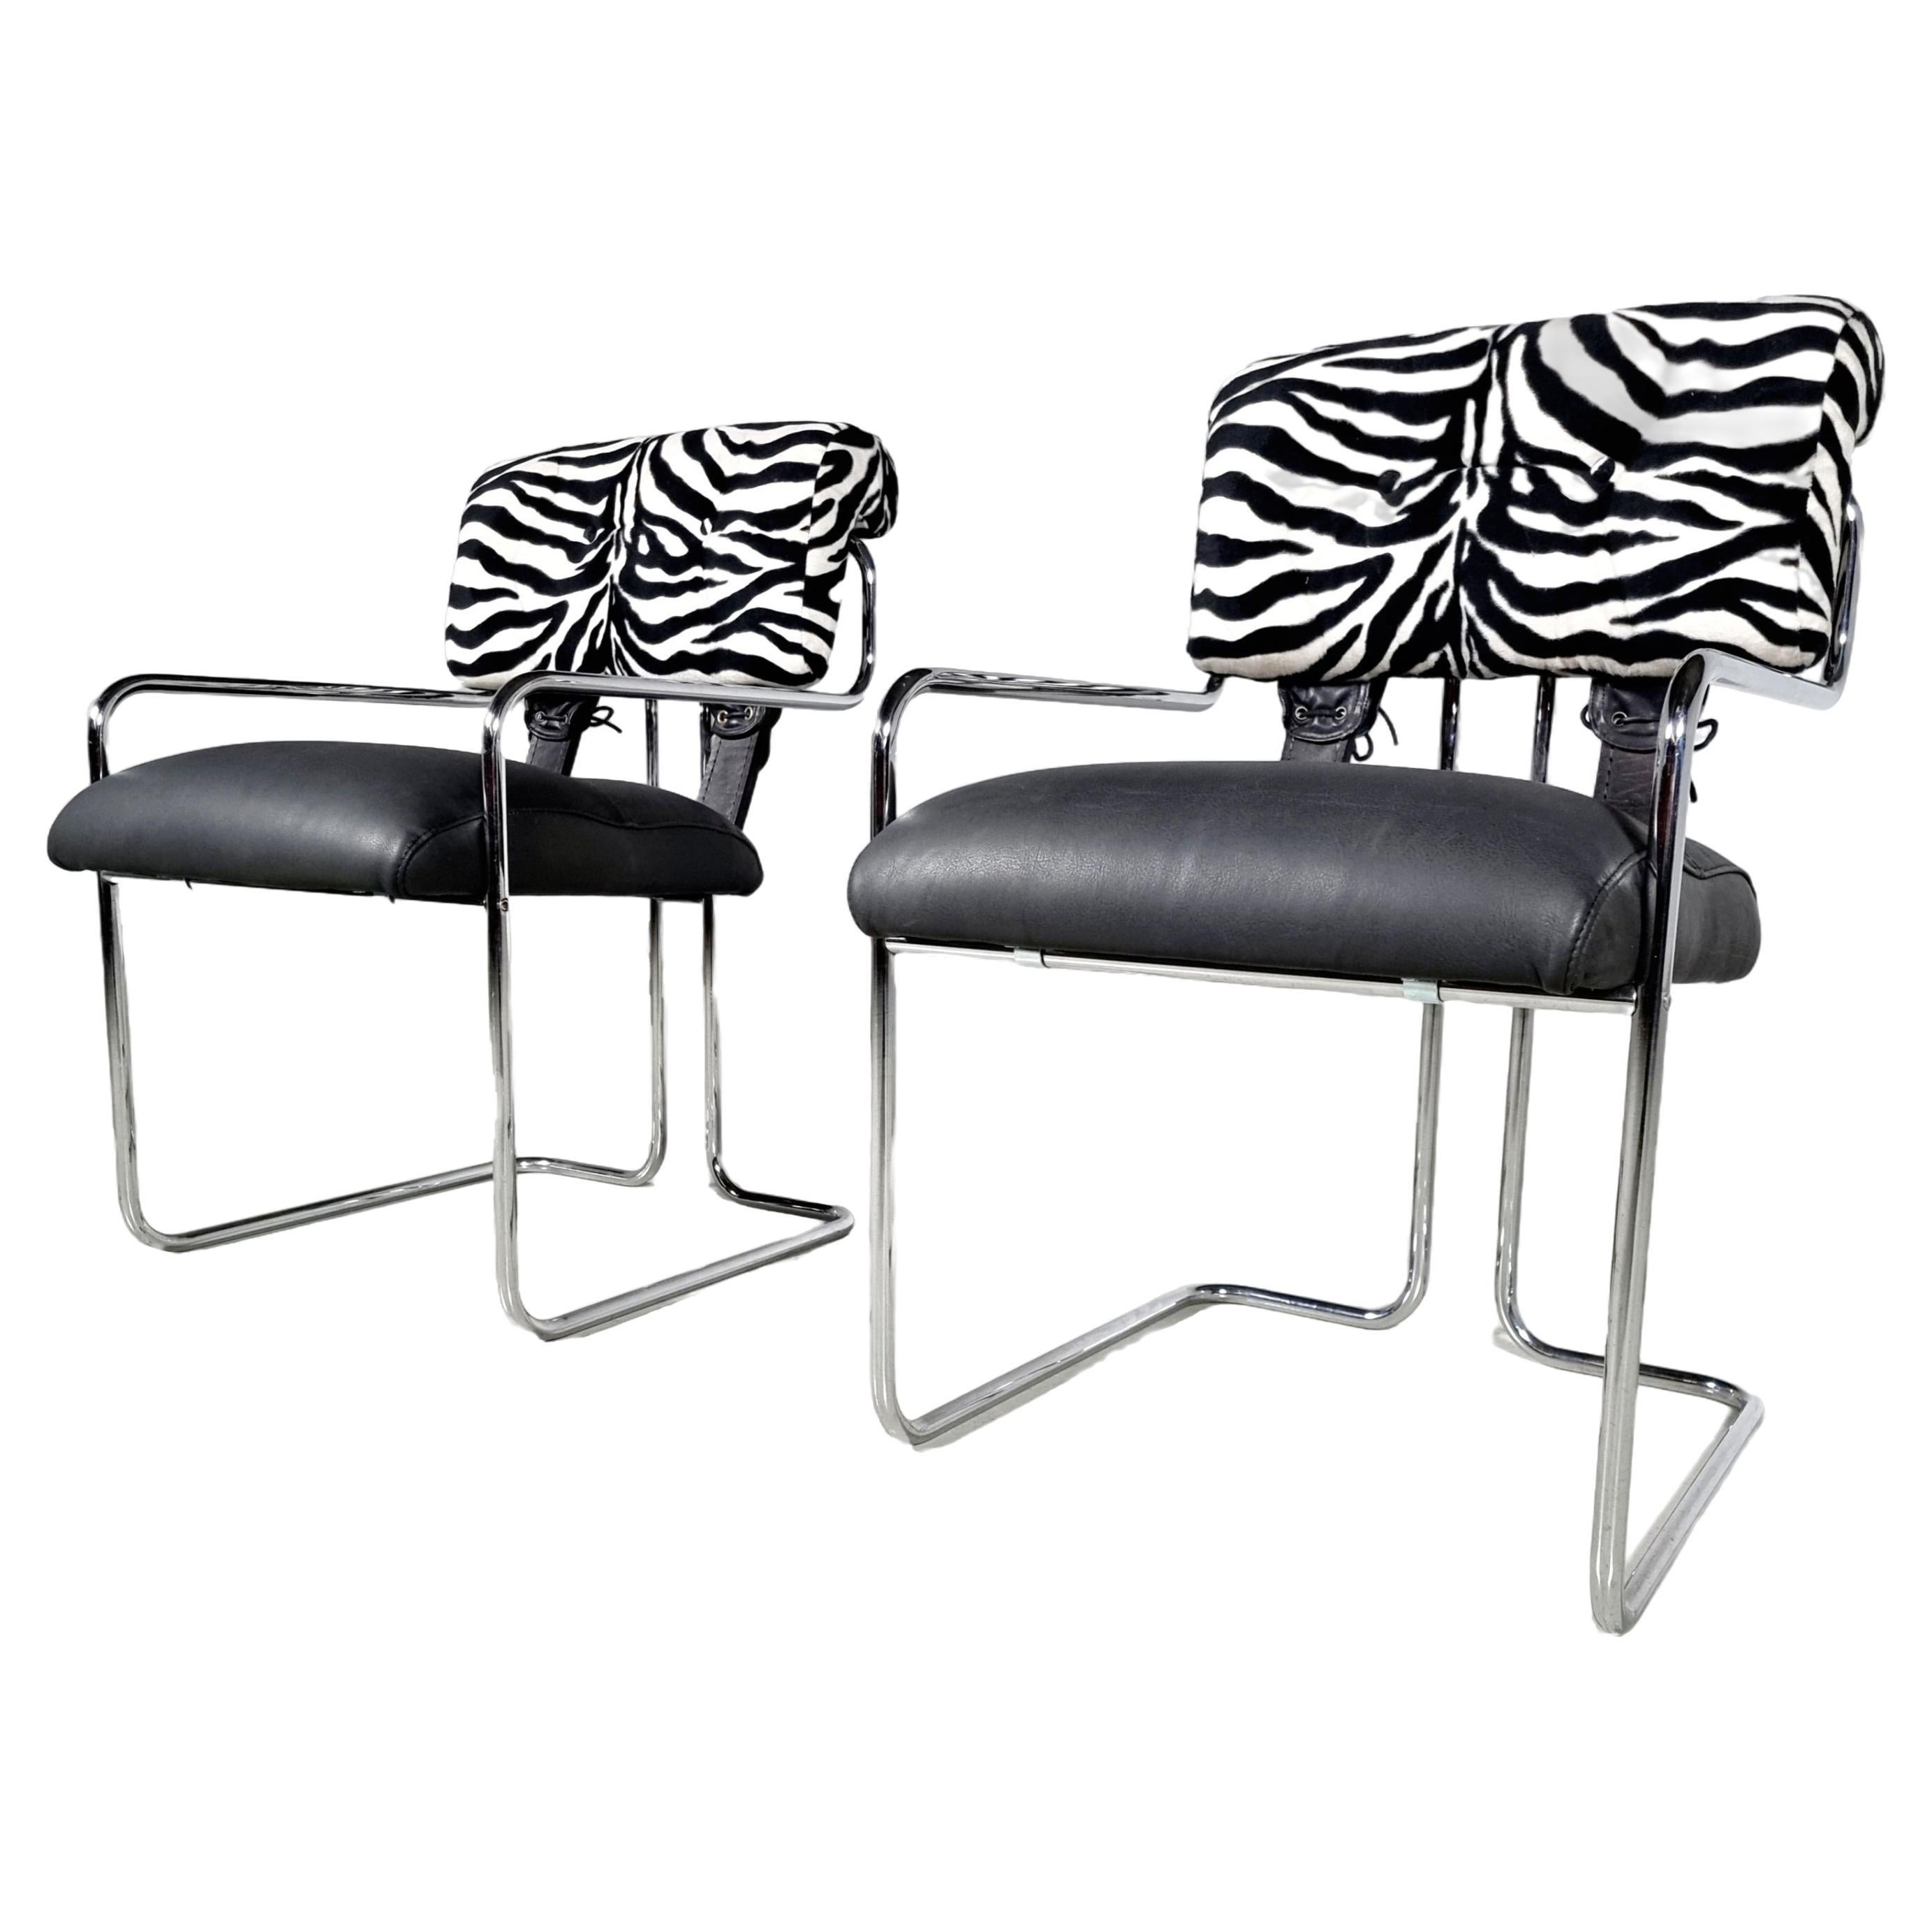 Tucroma Chairs in black leather and zebra fabric, Guido Faleschini, Mariani